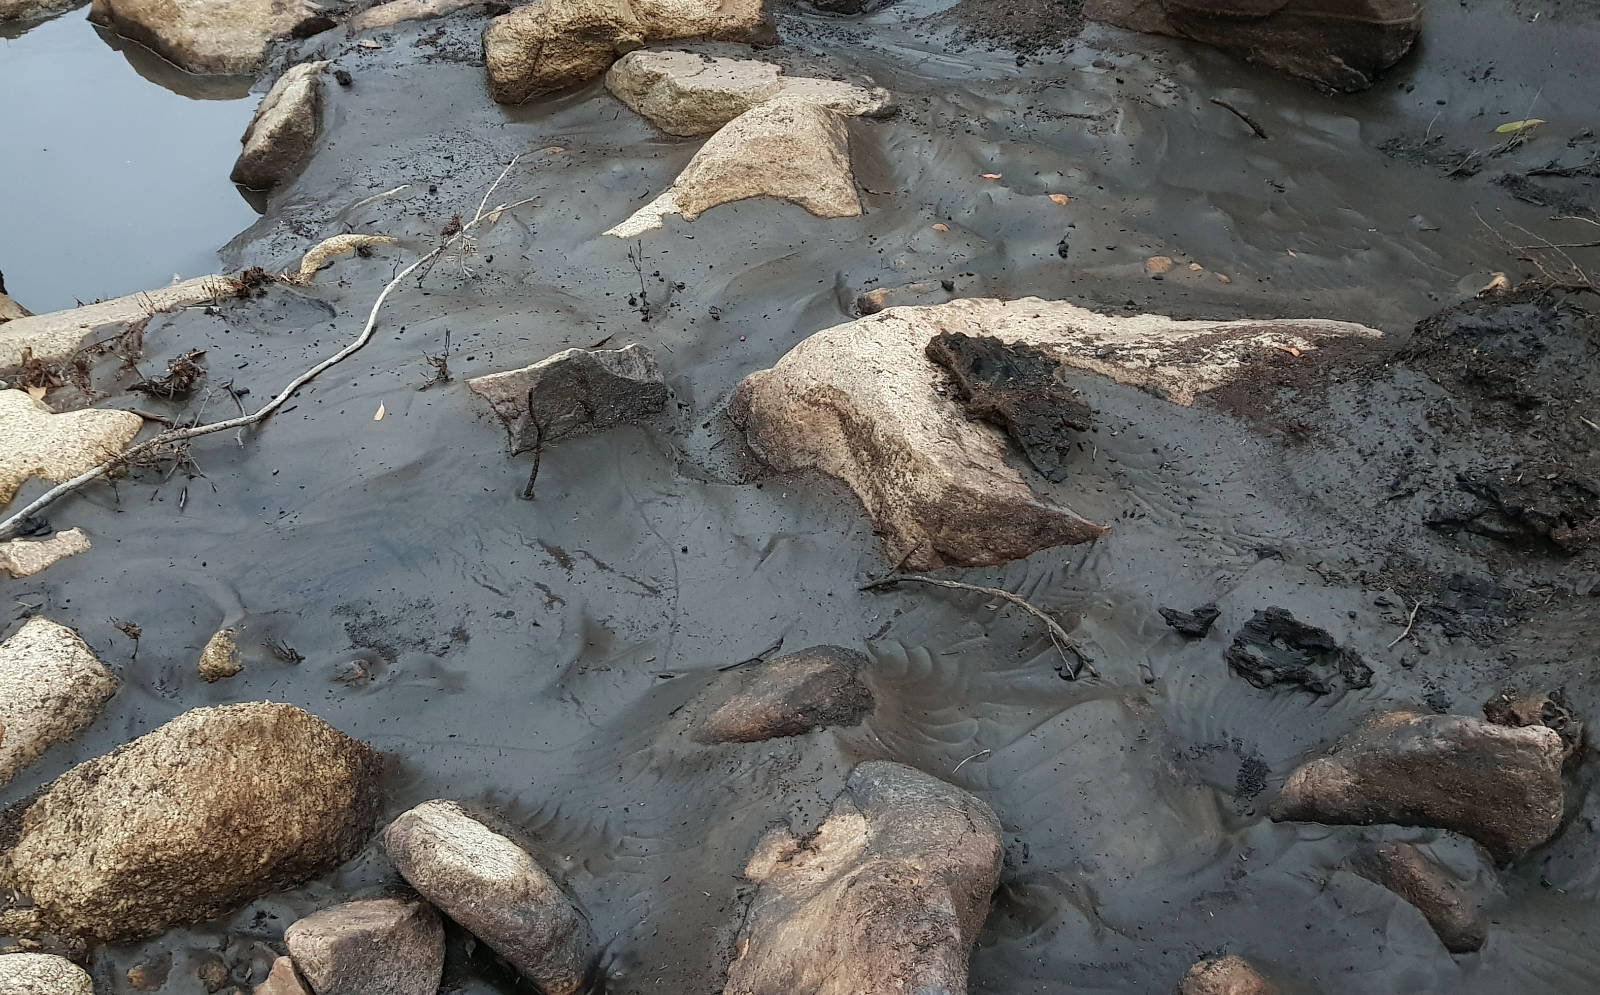 Thick layers of bushfire ash and sediment wash into the Upper Murrumbidgee river, smothering macroinvertebrate habitat.